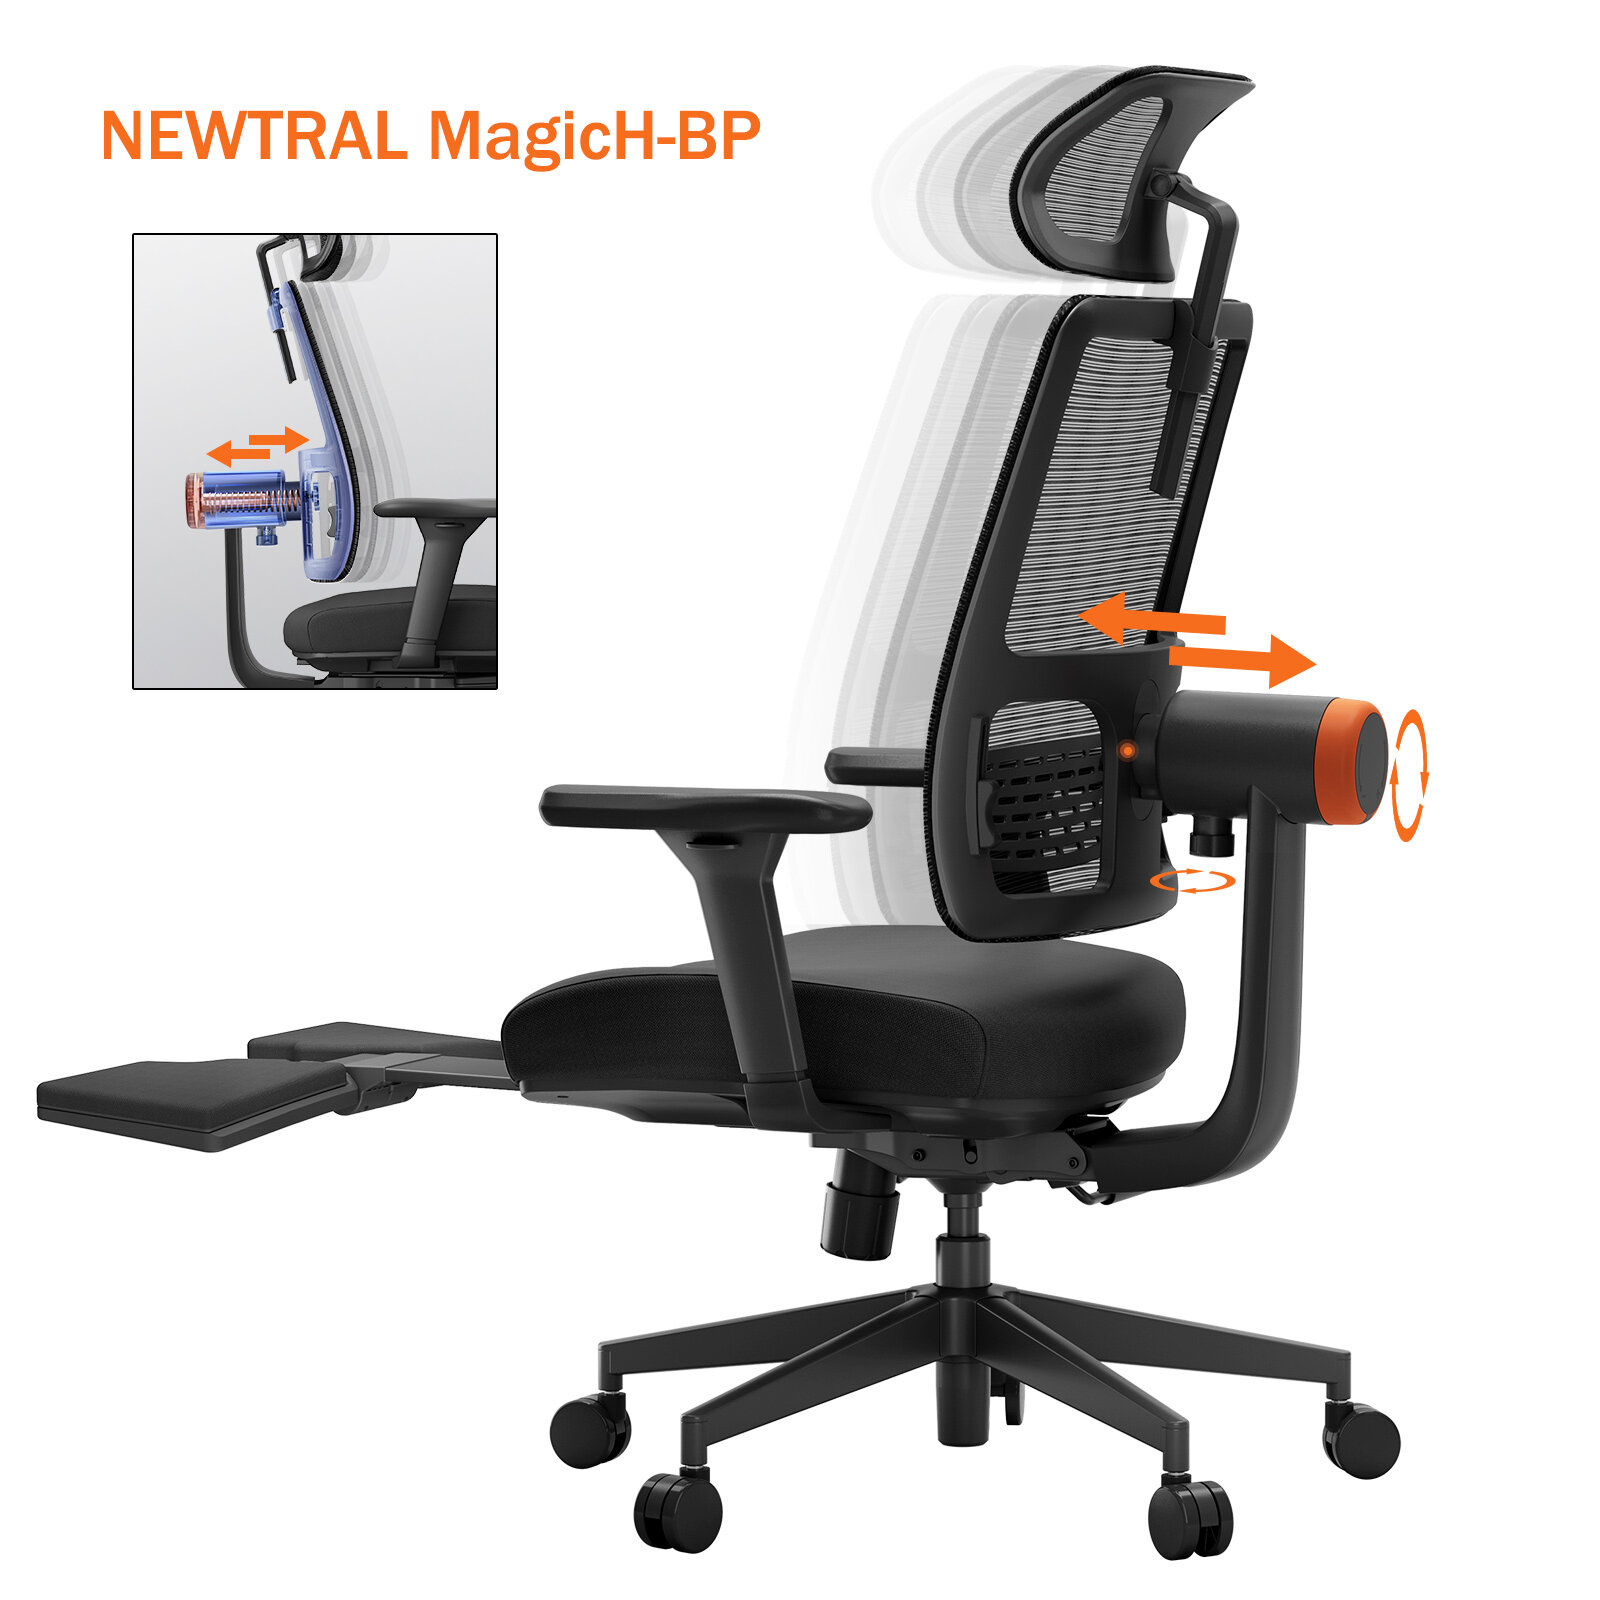 Fotel Newtral MagicH BP z EU za $239.99 / ~958zł